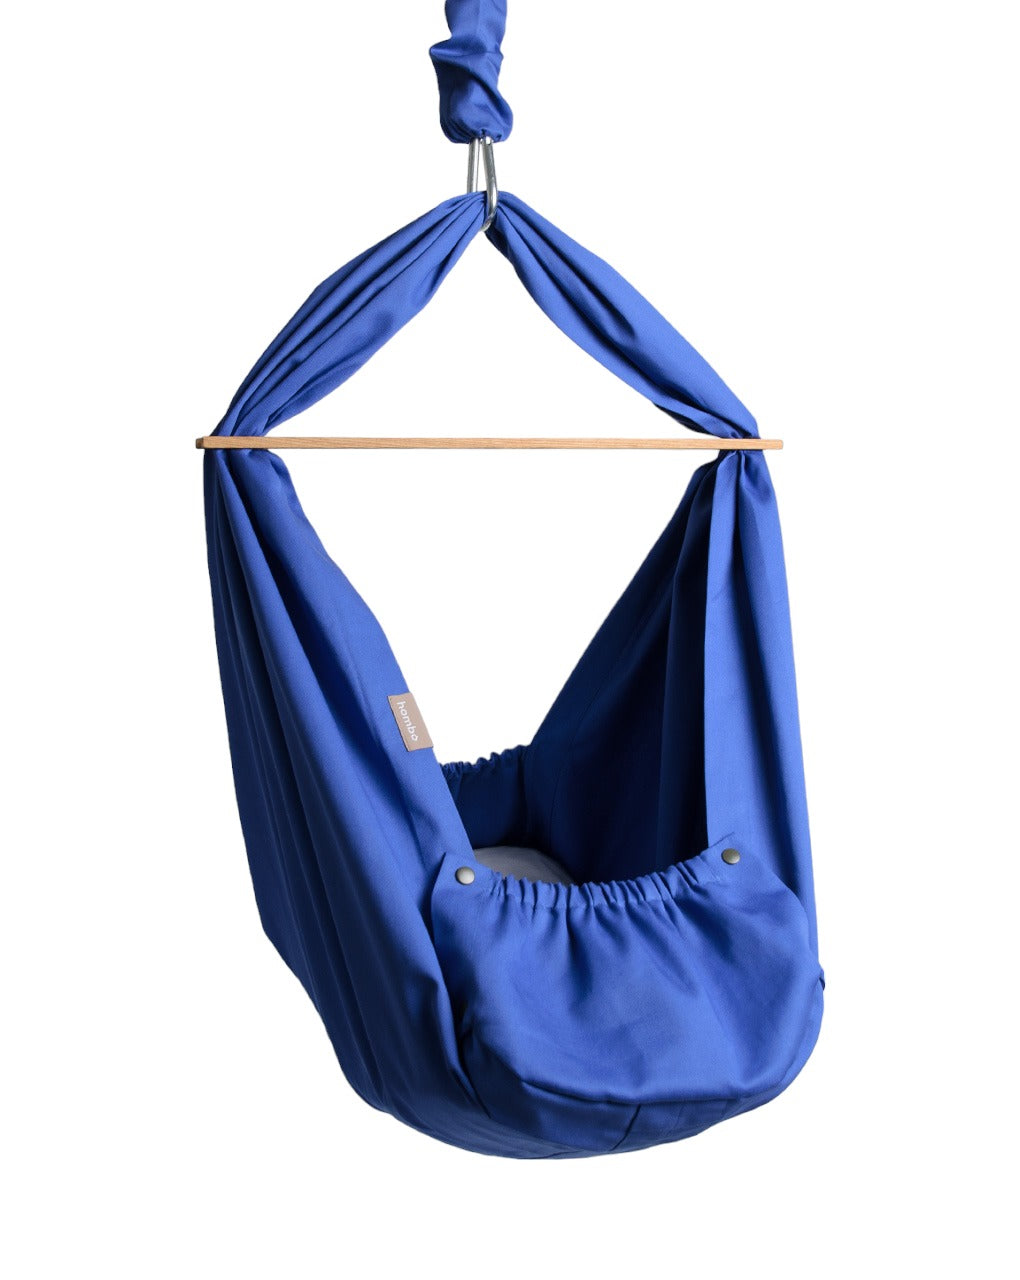 homba® baby hanging cradle cotton blue